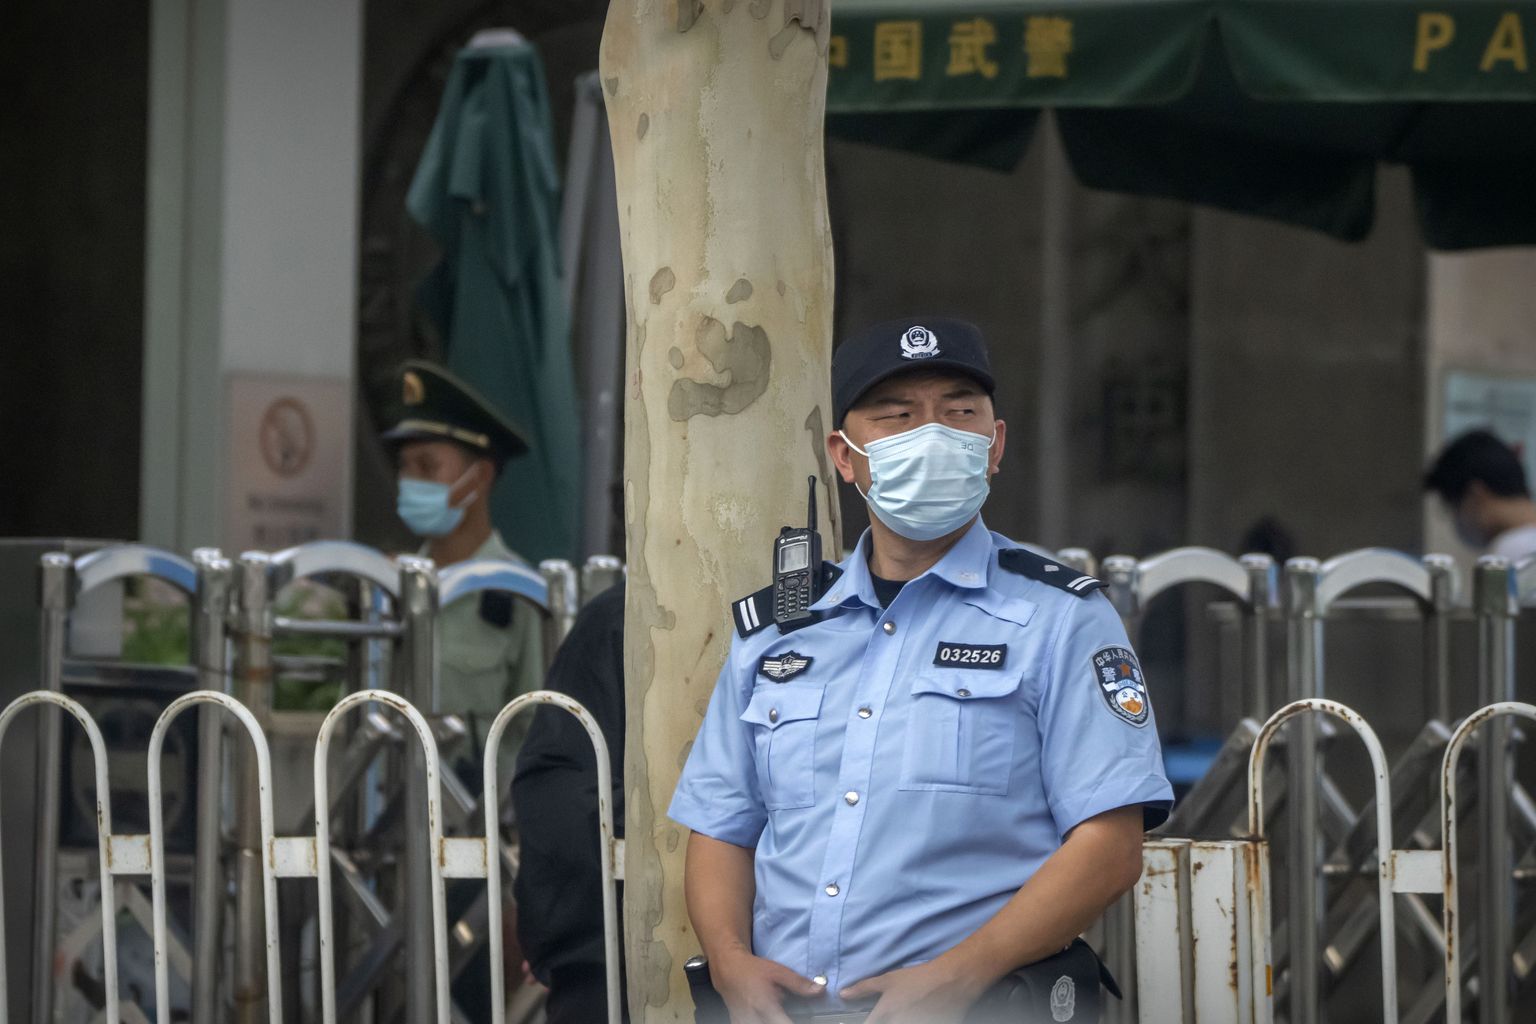 Hiina politseinik. Foto on illustreeriv.